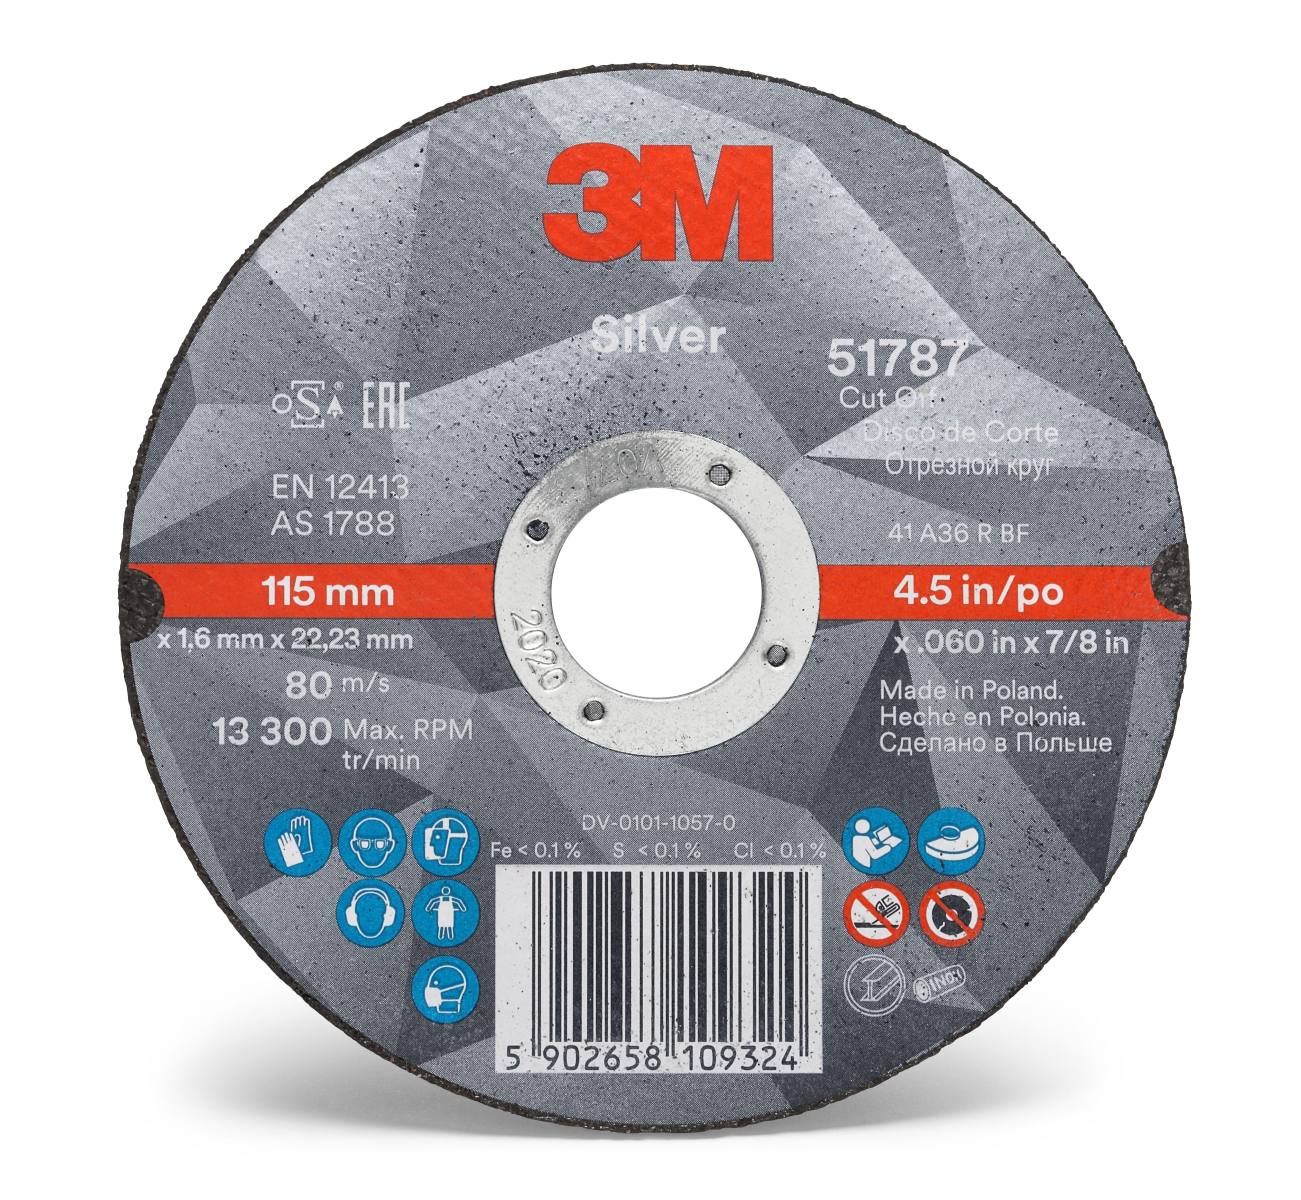 Disco de corte 3M Silver Cut-Off, 115 mm, 1,6 mm, 22,23 mm, T41, 51787